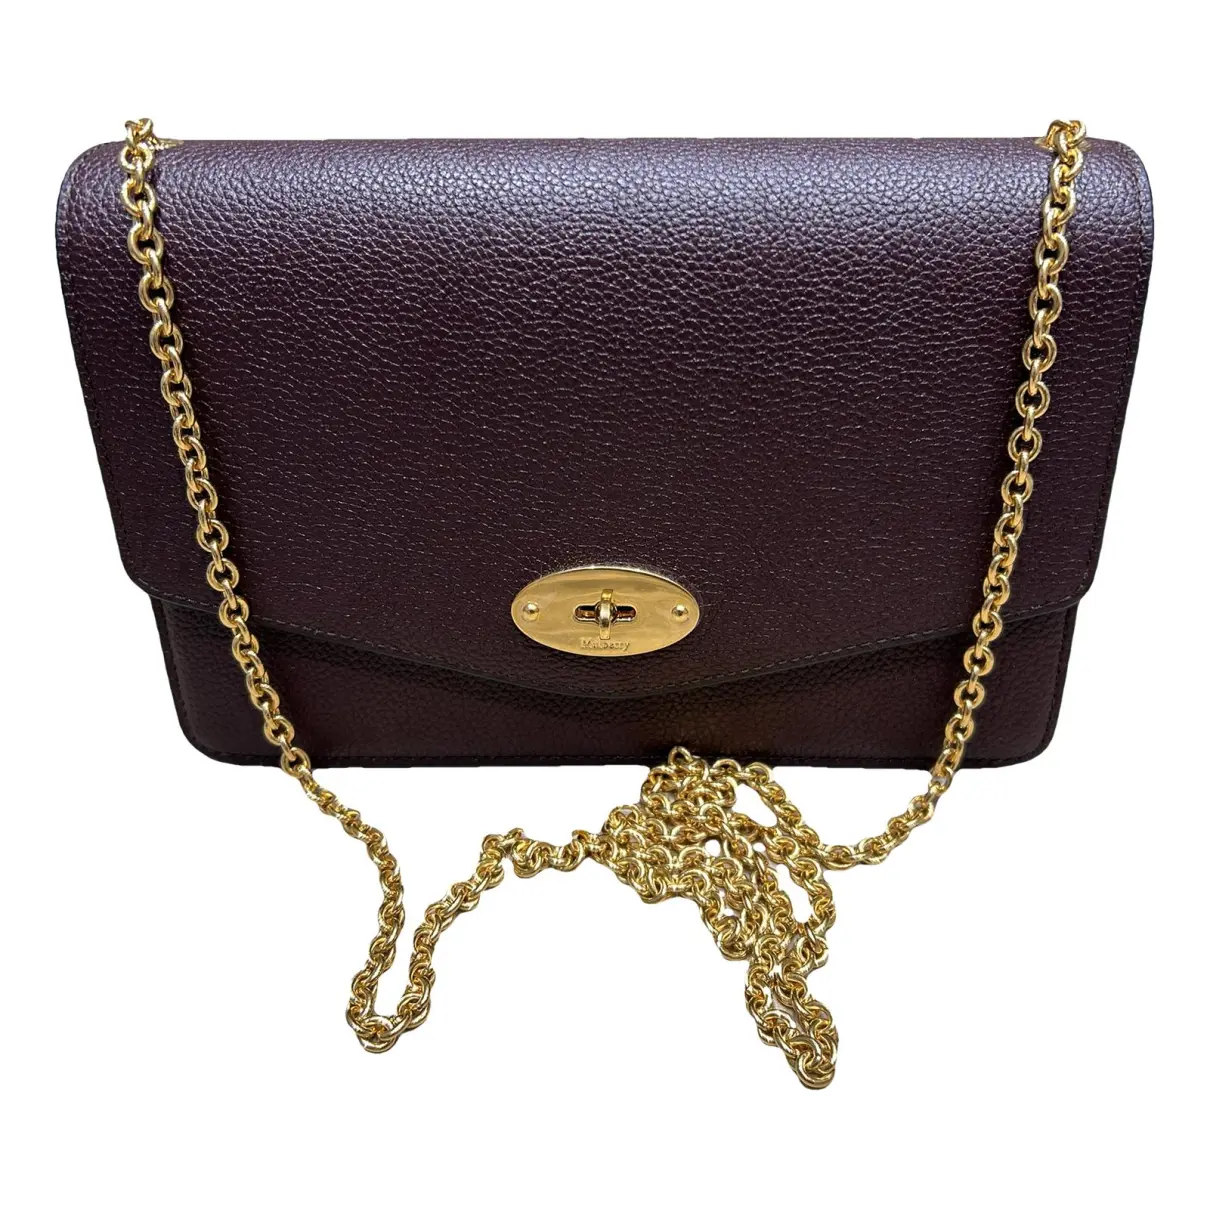 Darley leather handbag Mulberry